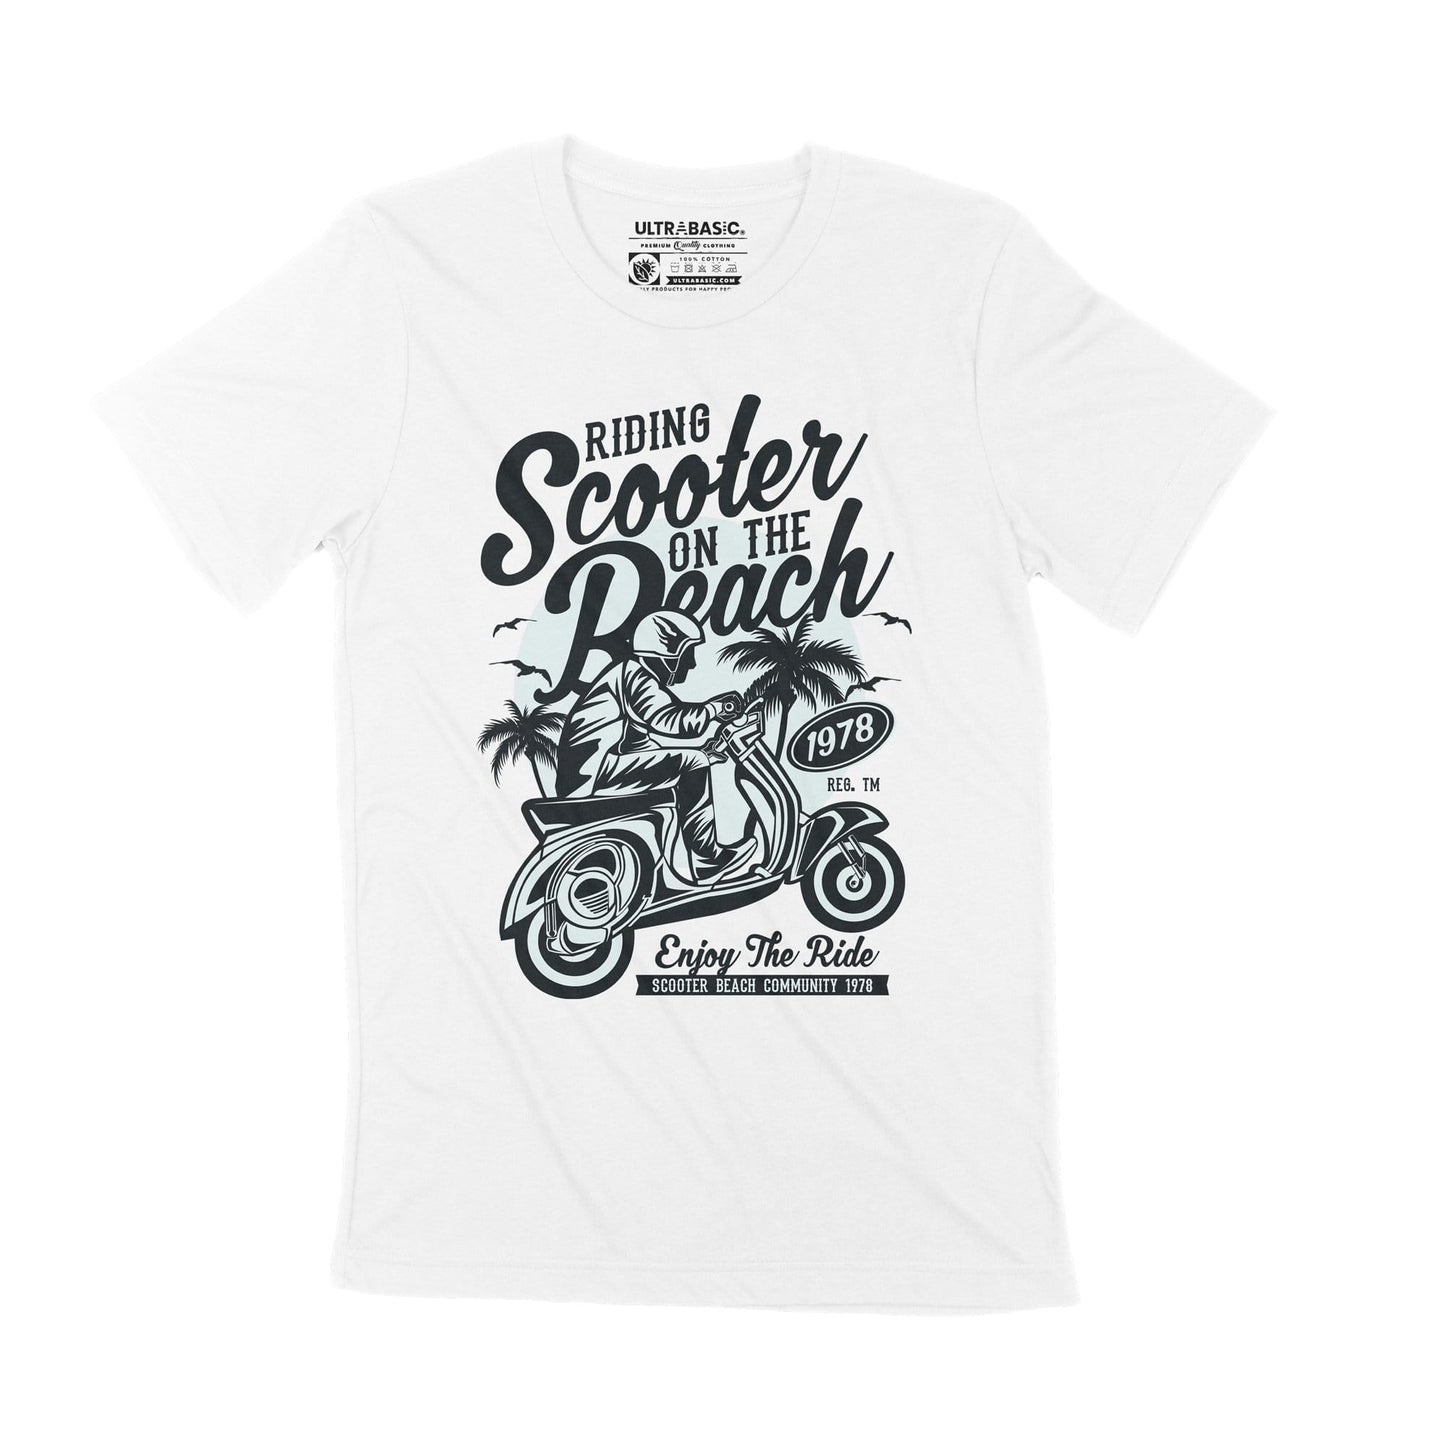 ULTRABASIC Men's T-Shirt Scooter Rider On the Beach 1978 - Motorcycle Tee Shirt